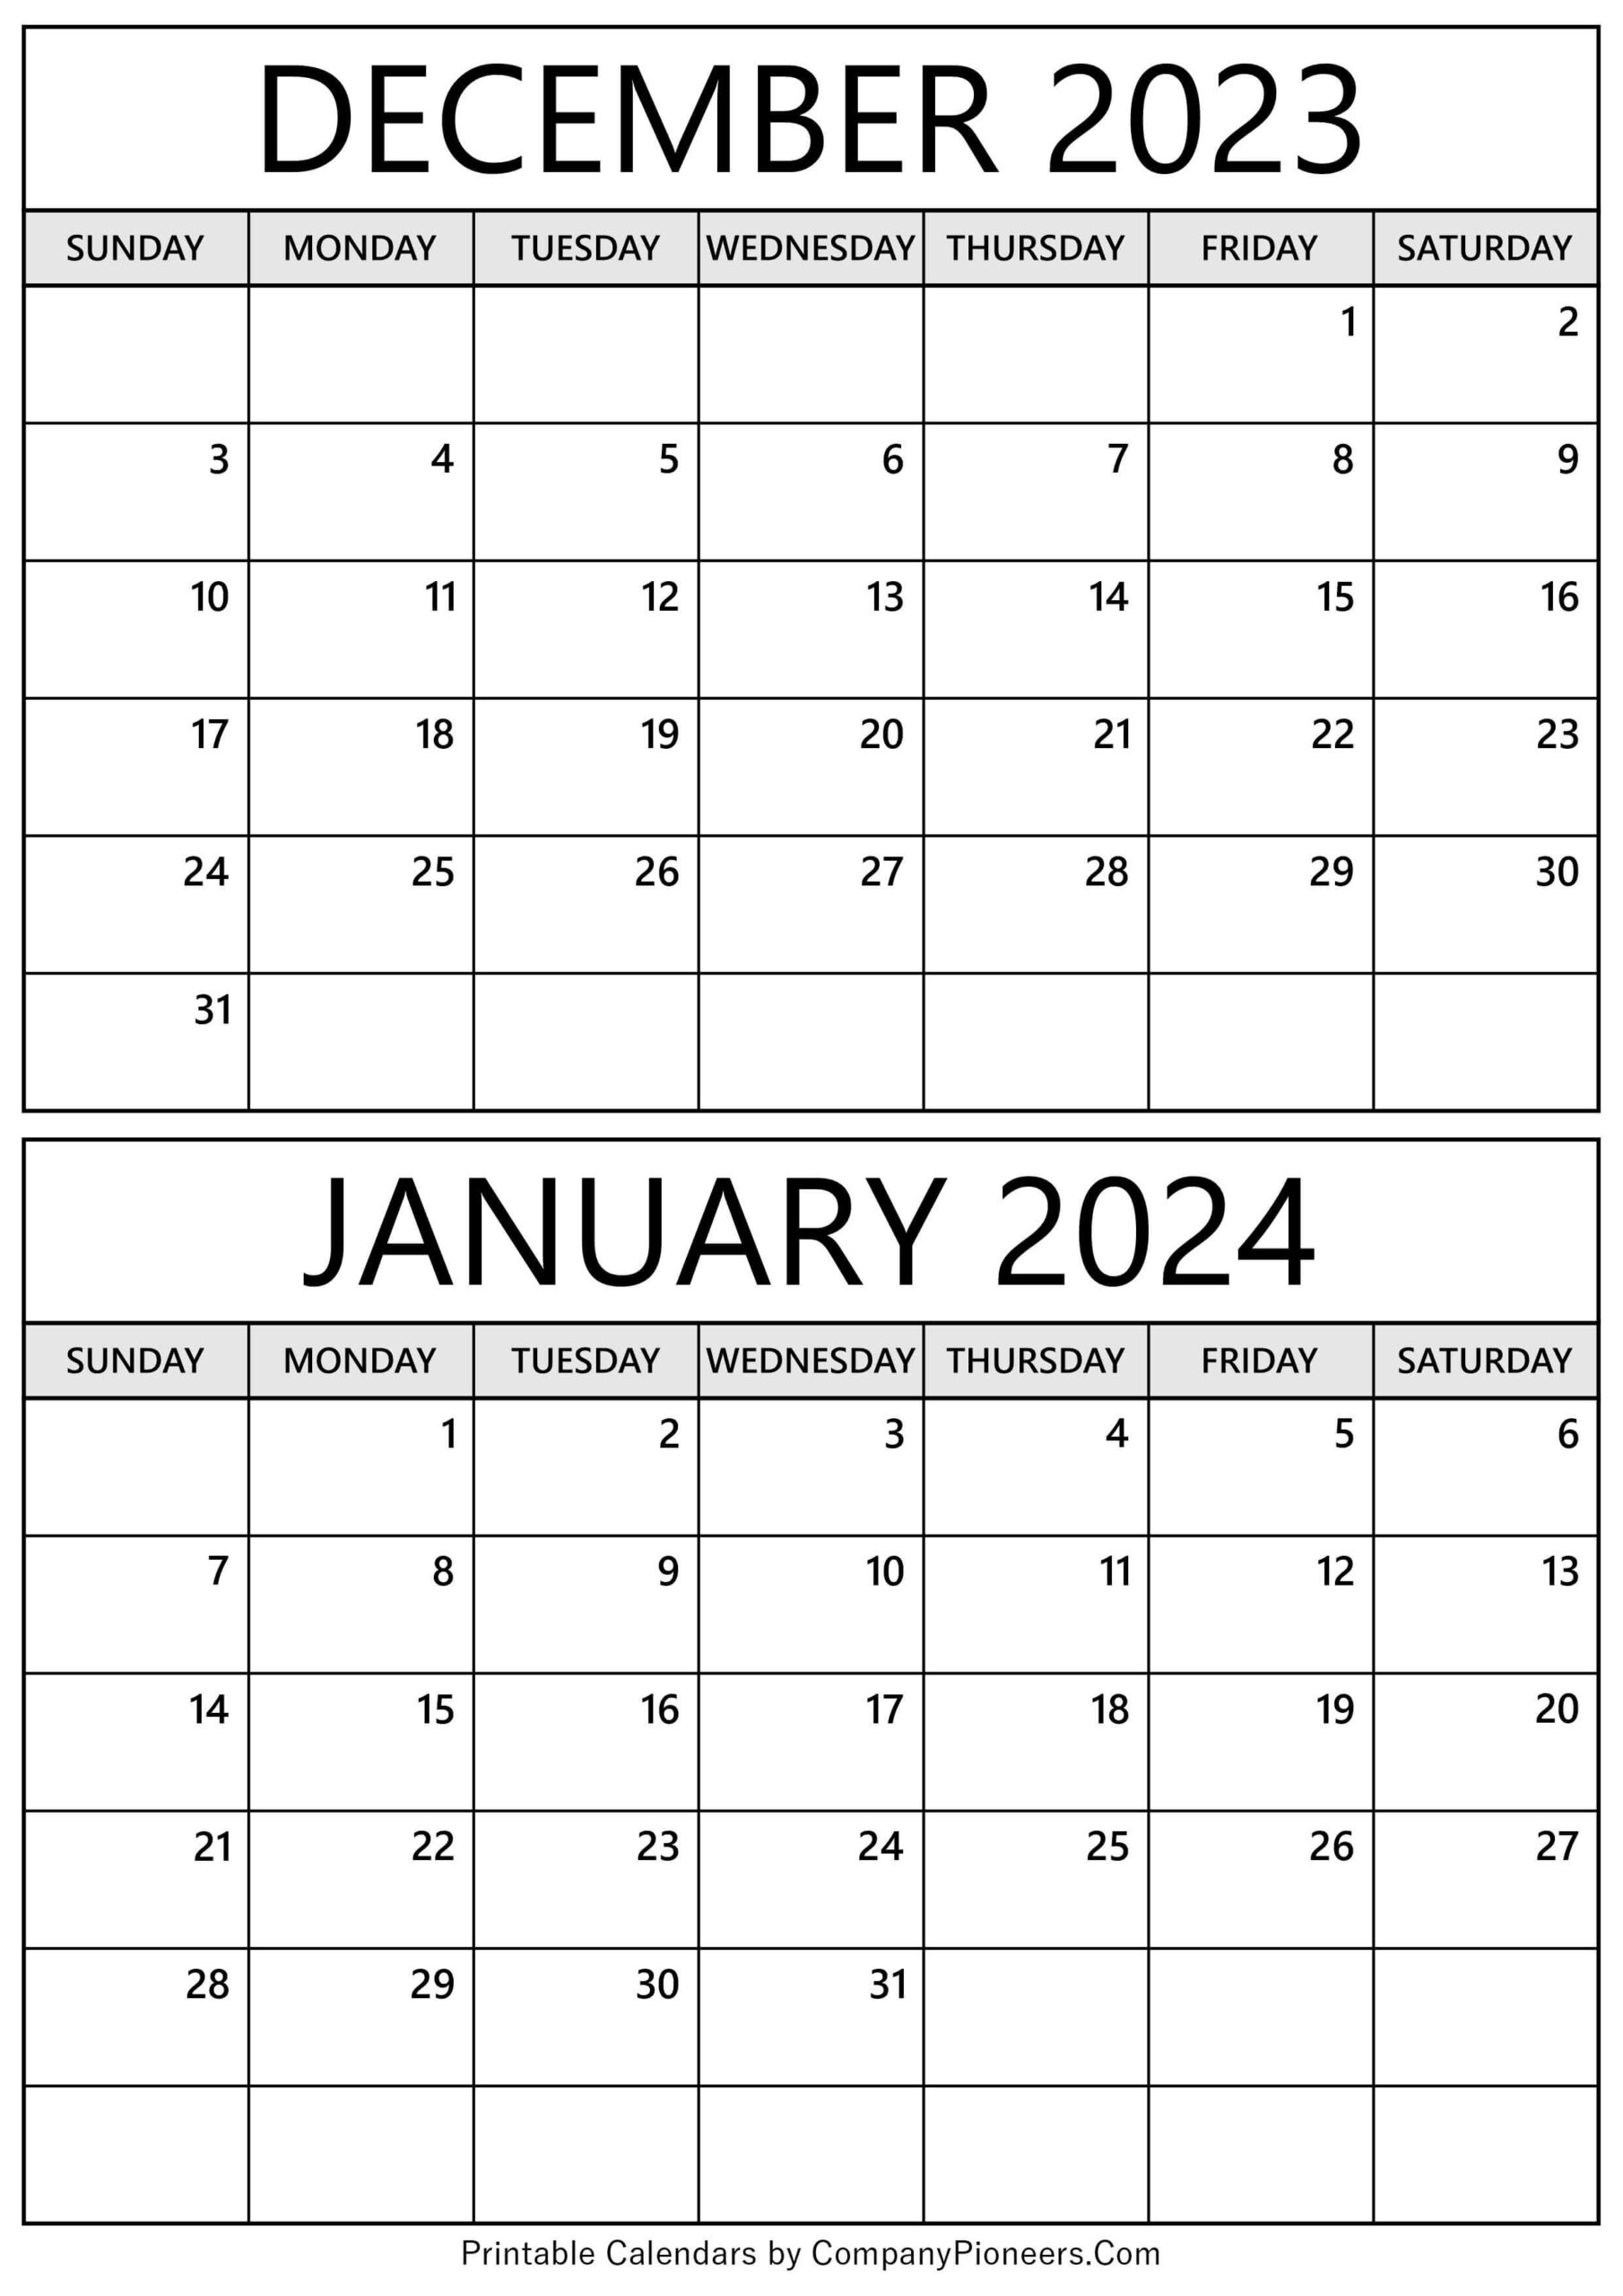 December 2023 January 2024 Calendar Printable - Template for January - December 2024 Calendar Printable